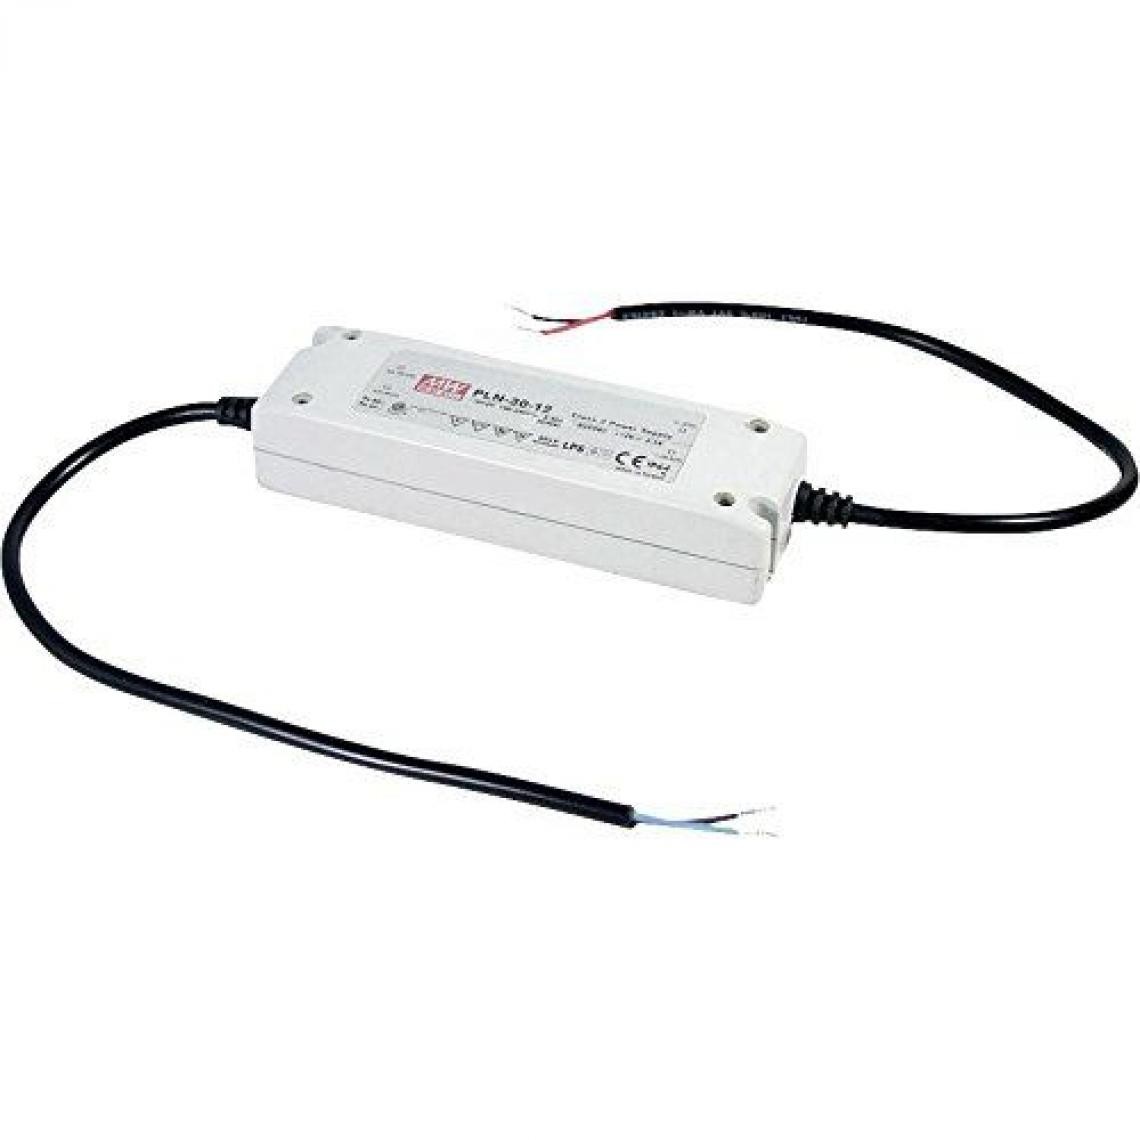 Inconnu - Driver LED Mean Well PLN-30-12 60 W 12 V DC 2,5 A Tension fixe/courant constant - Autres équipements modulaires